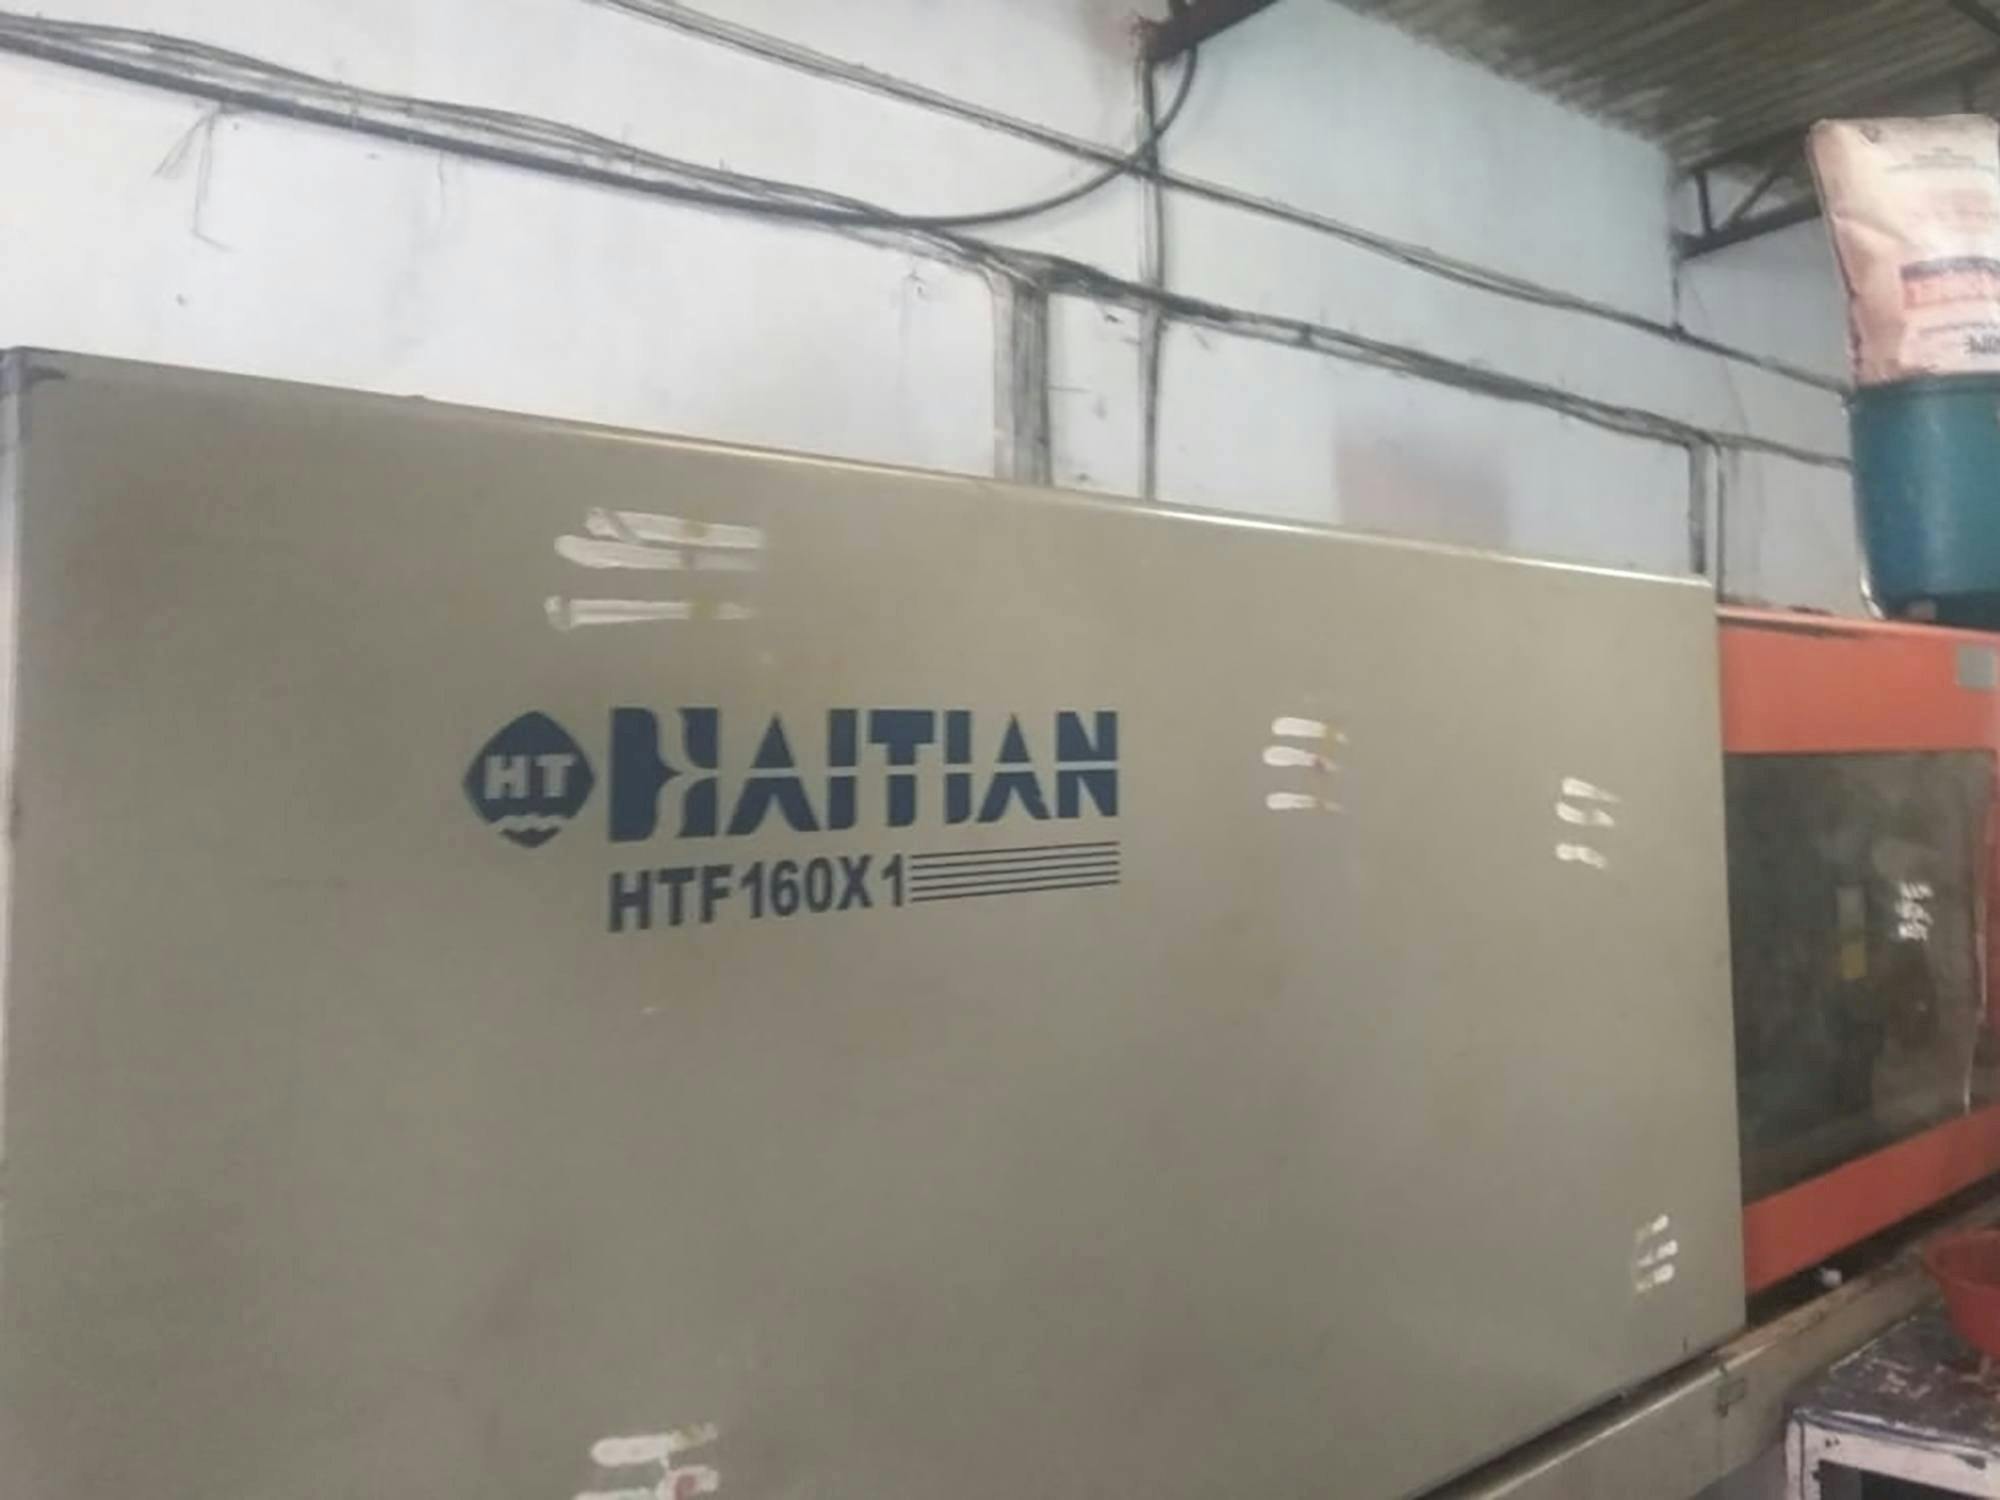 Vista frontale della macchina HAITIAN HTF160X1